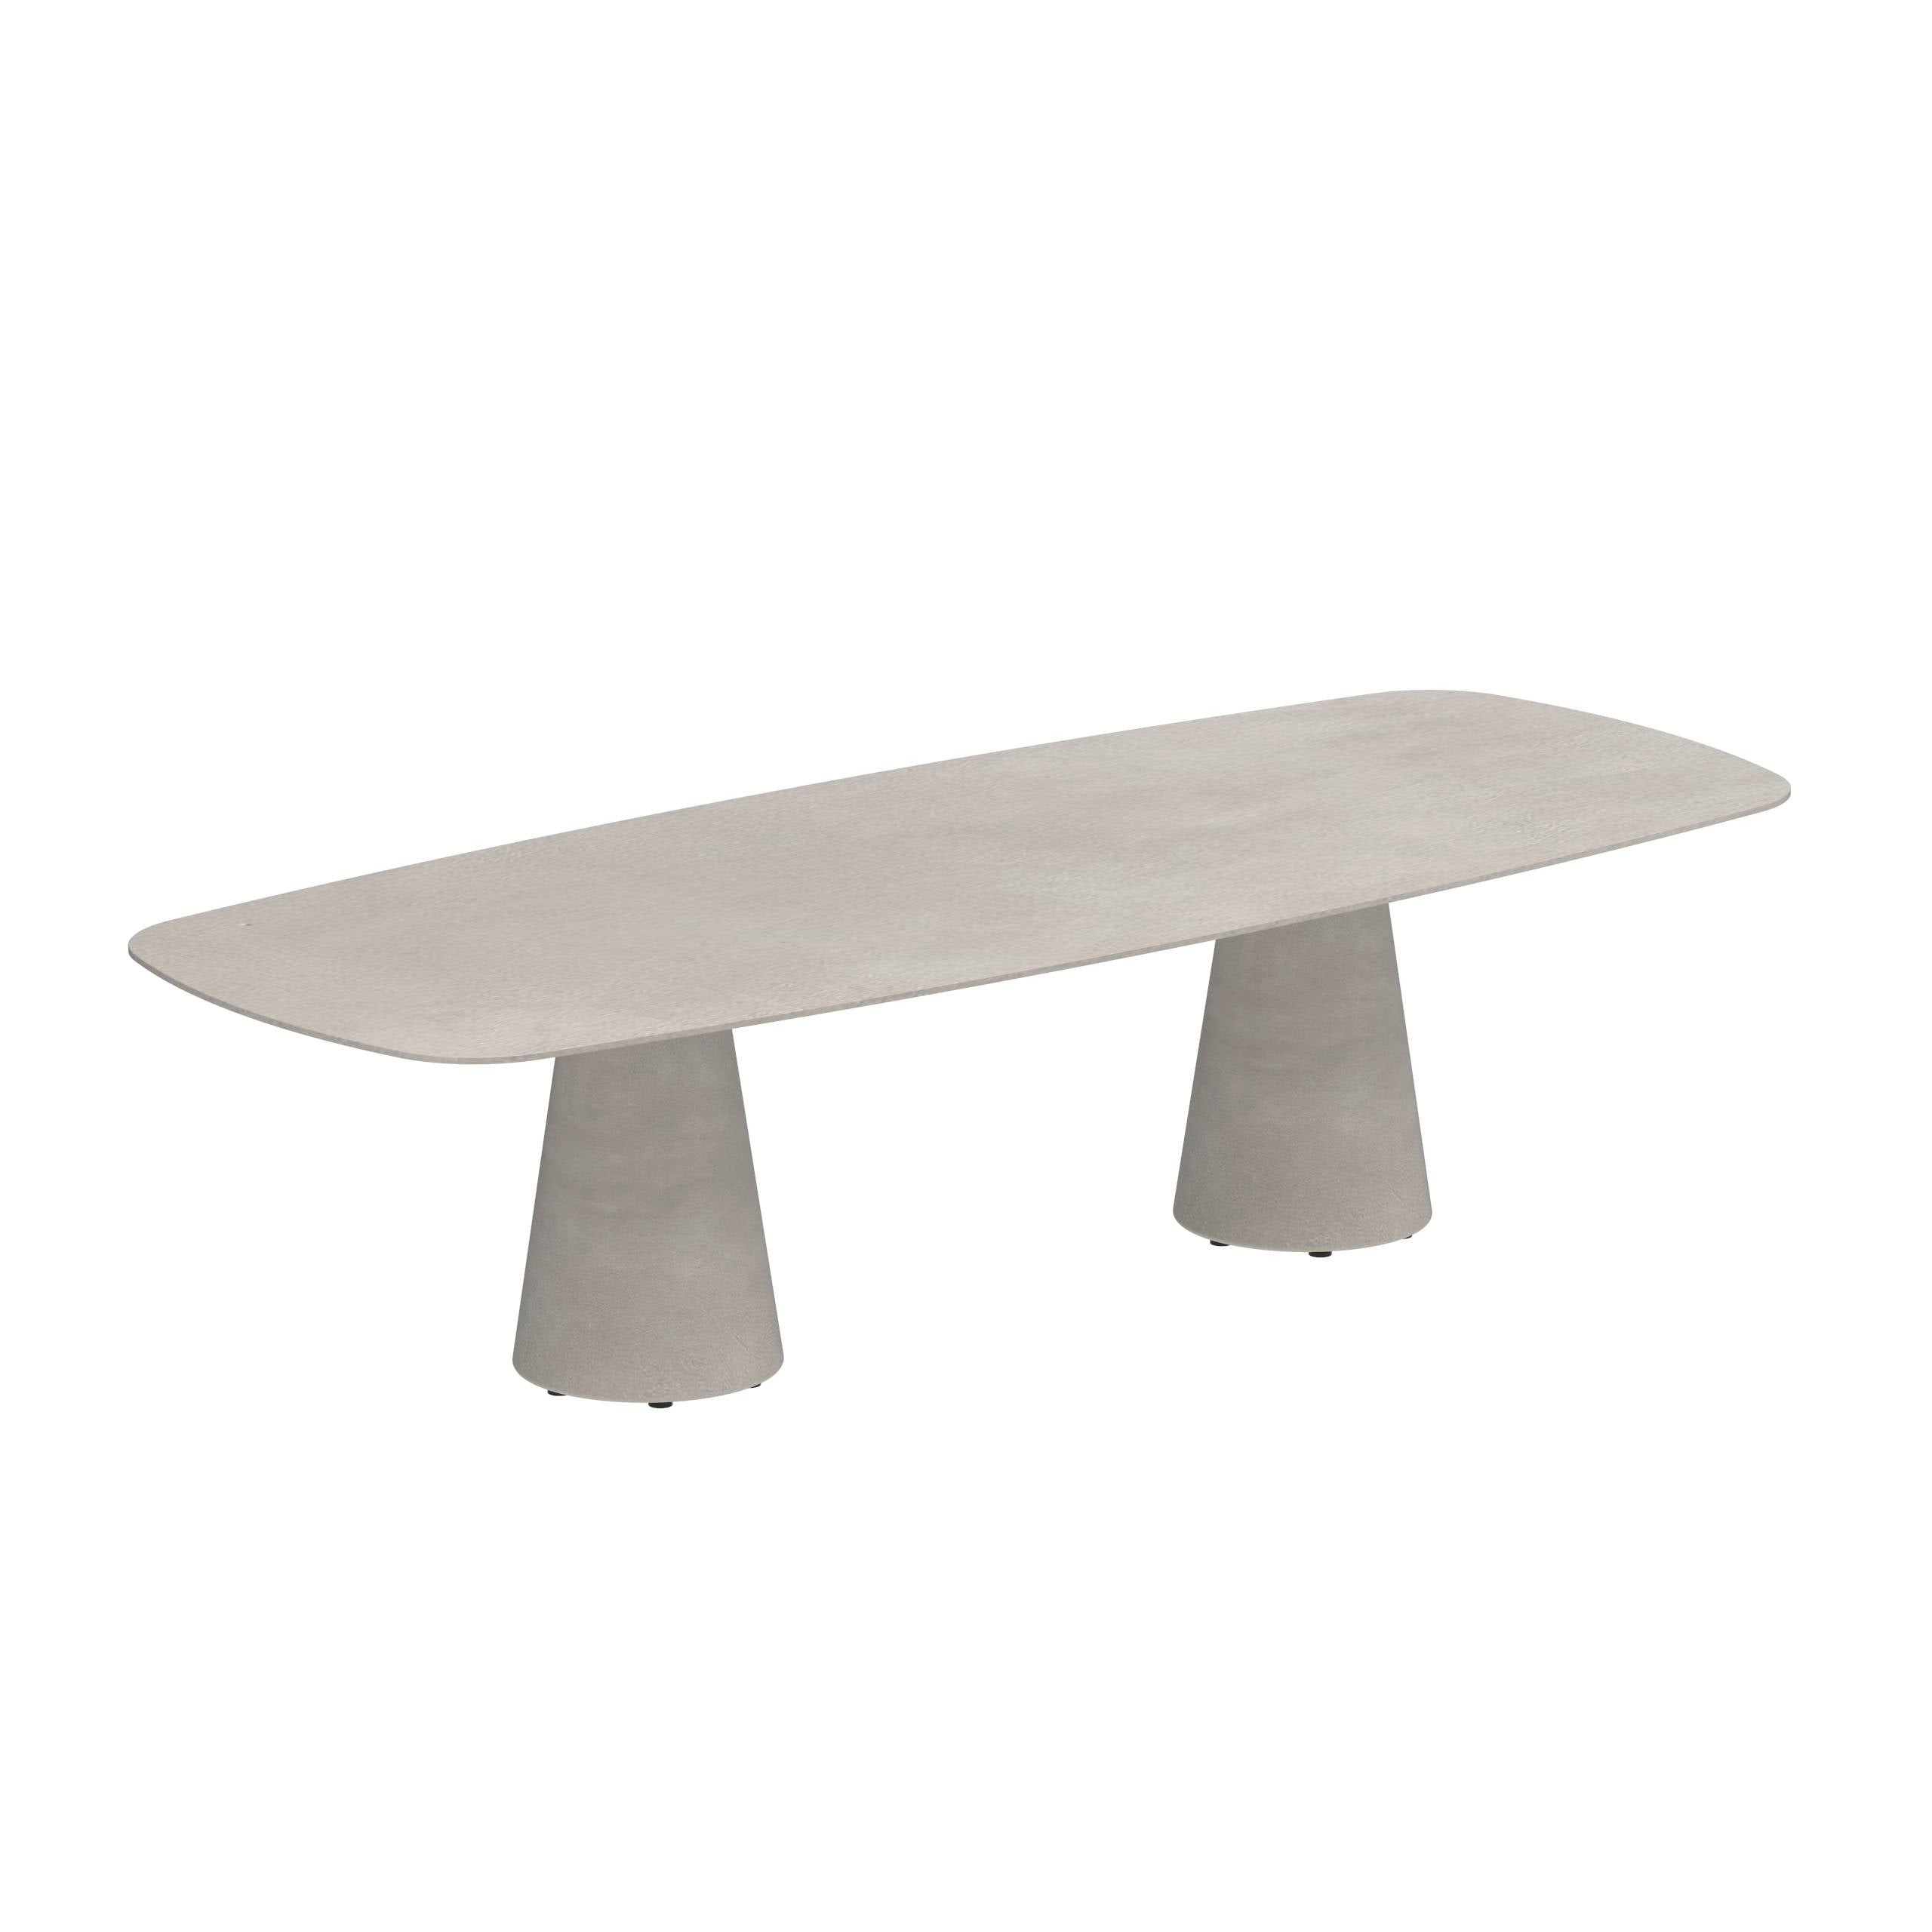 Conix Table 300x120 Cm Legs Concrete Cement Grey - Table Top Ceramic Cemento Luminoso